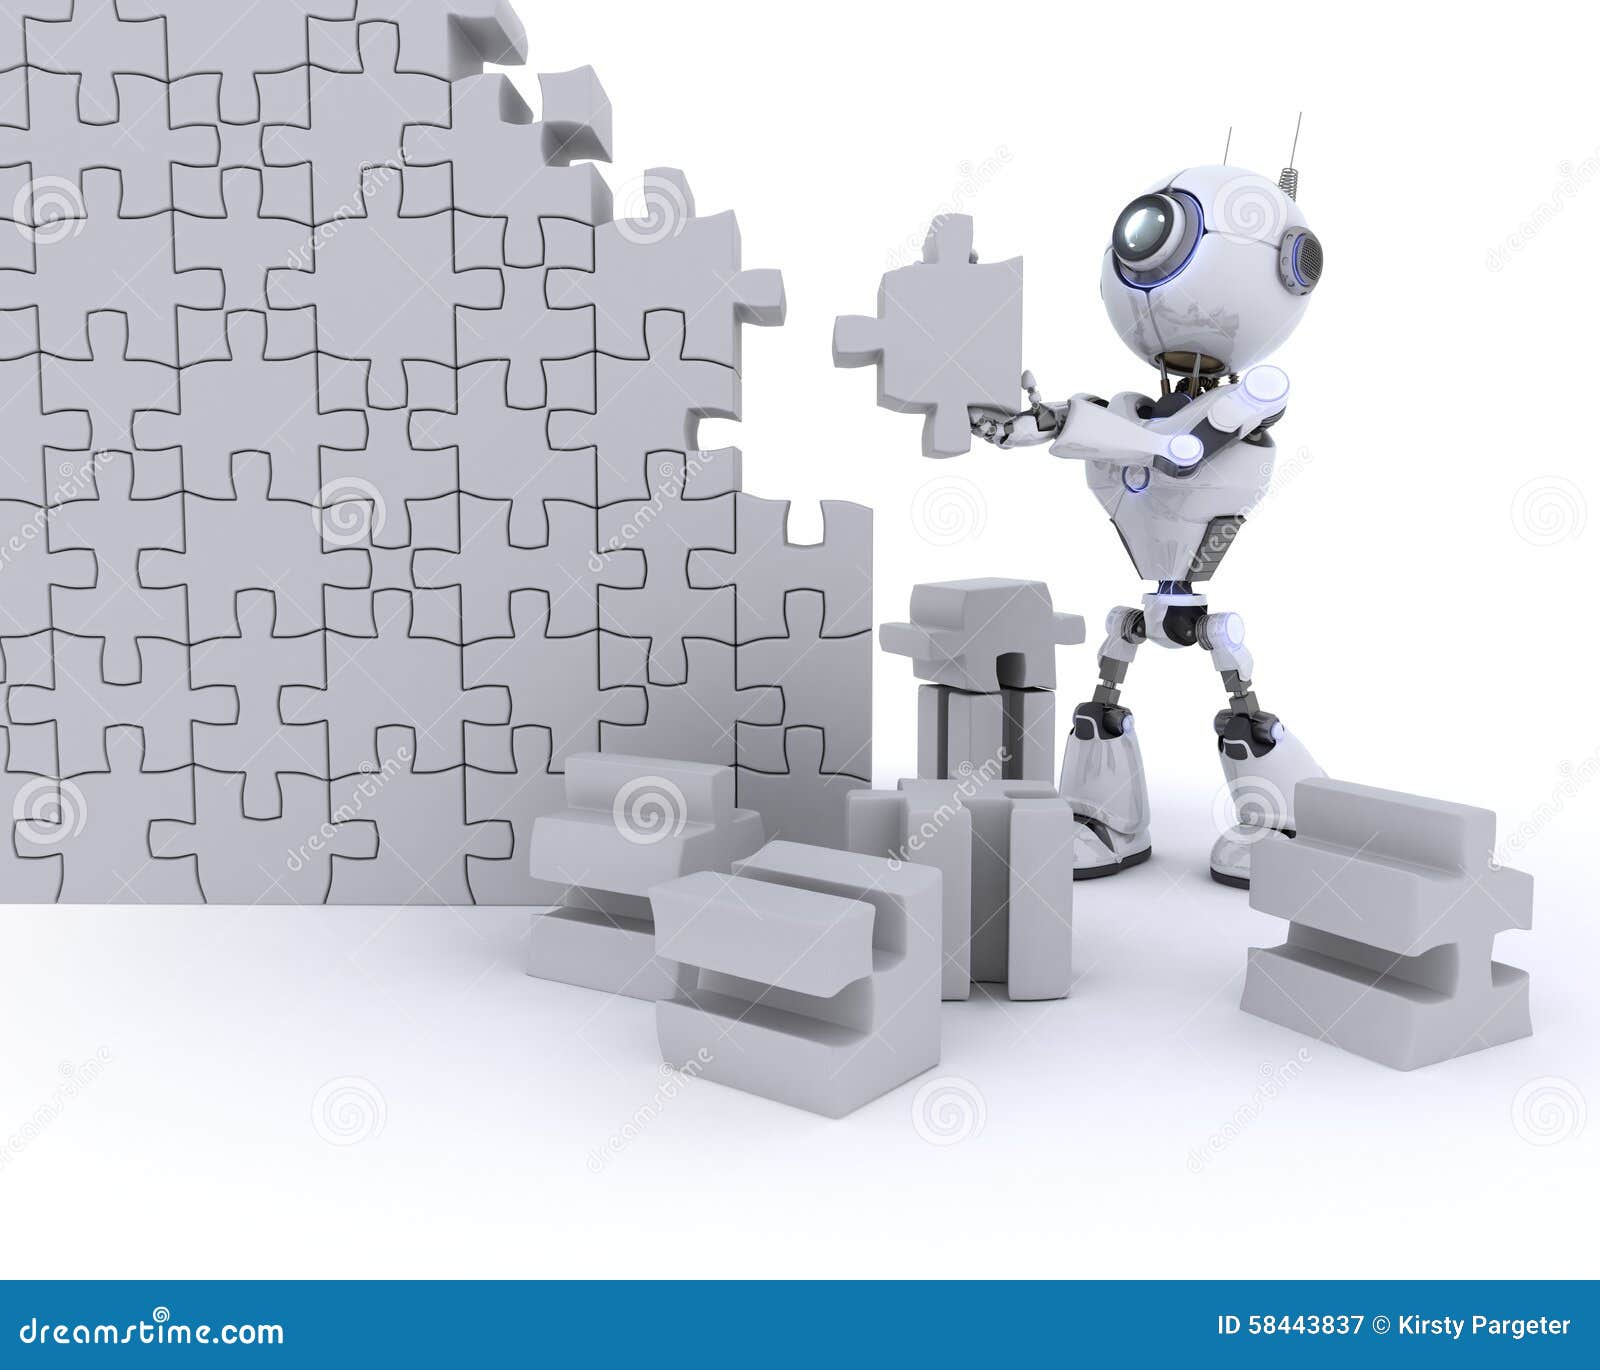 NEW Puzzlebug 100 Piece Jigsaw Puzzle ~ Blue Robot 